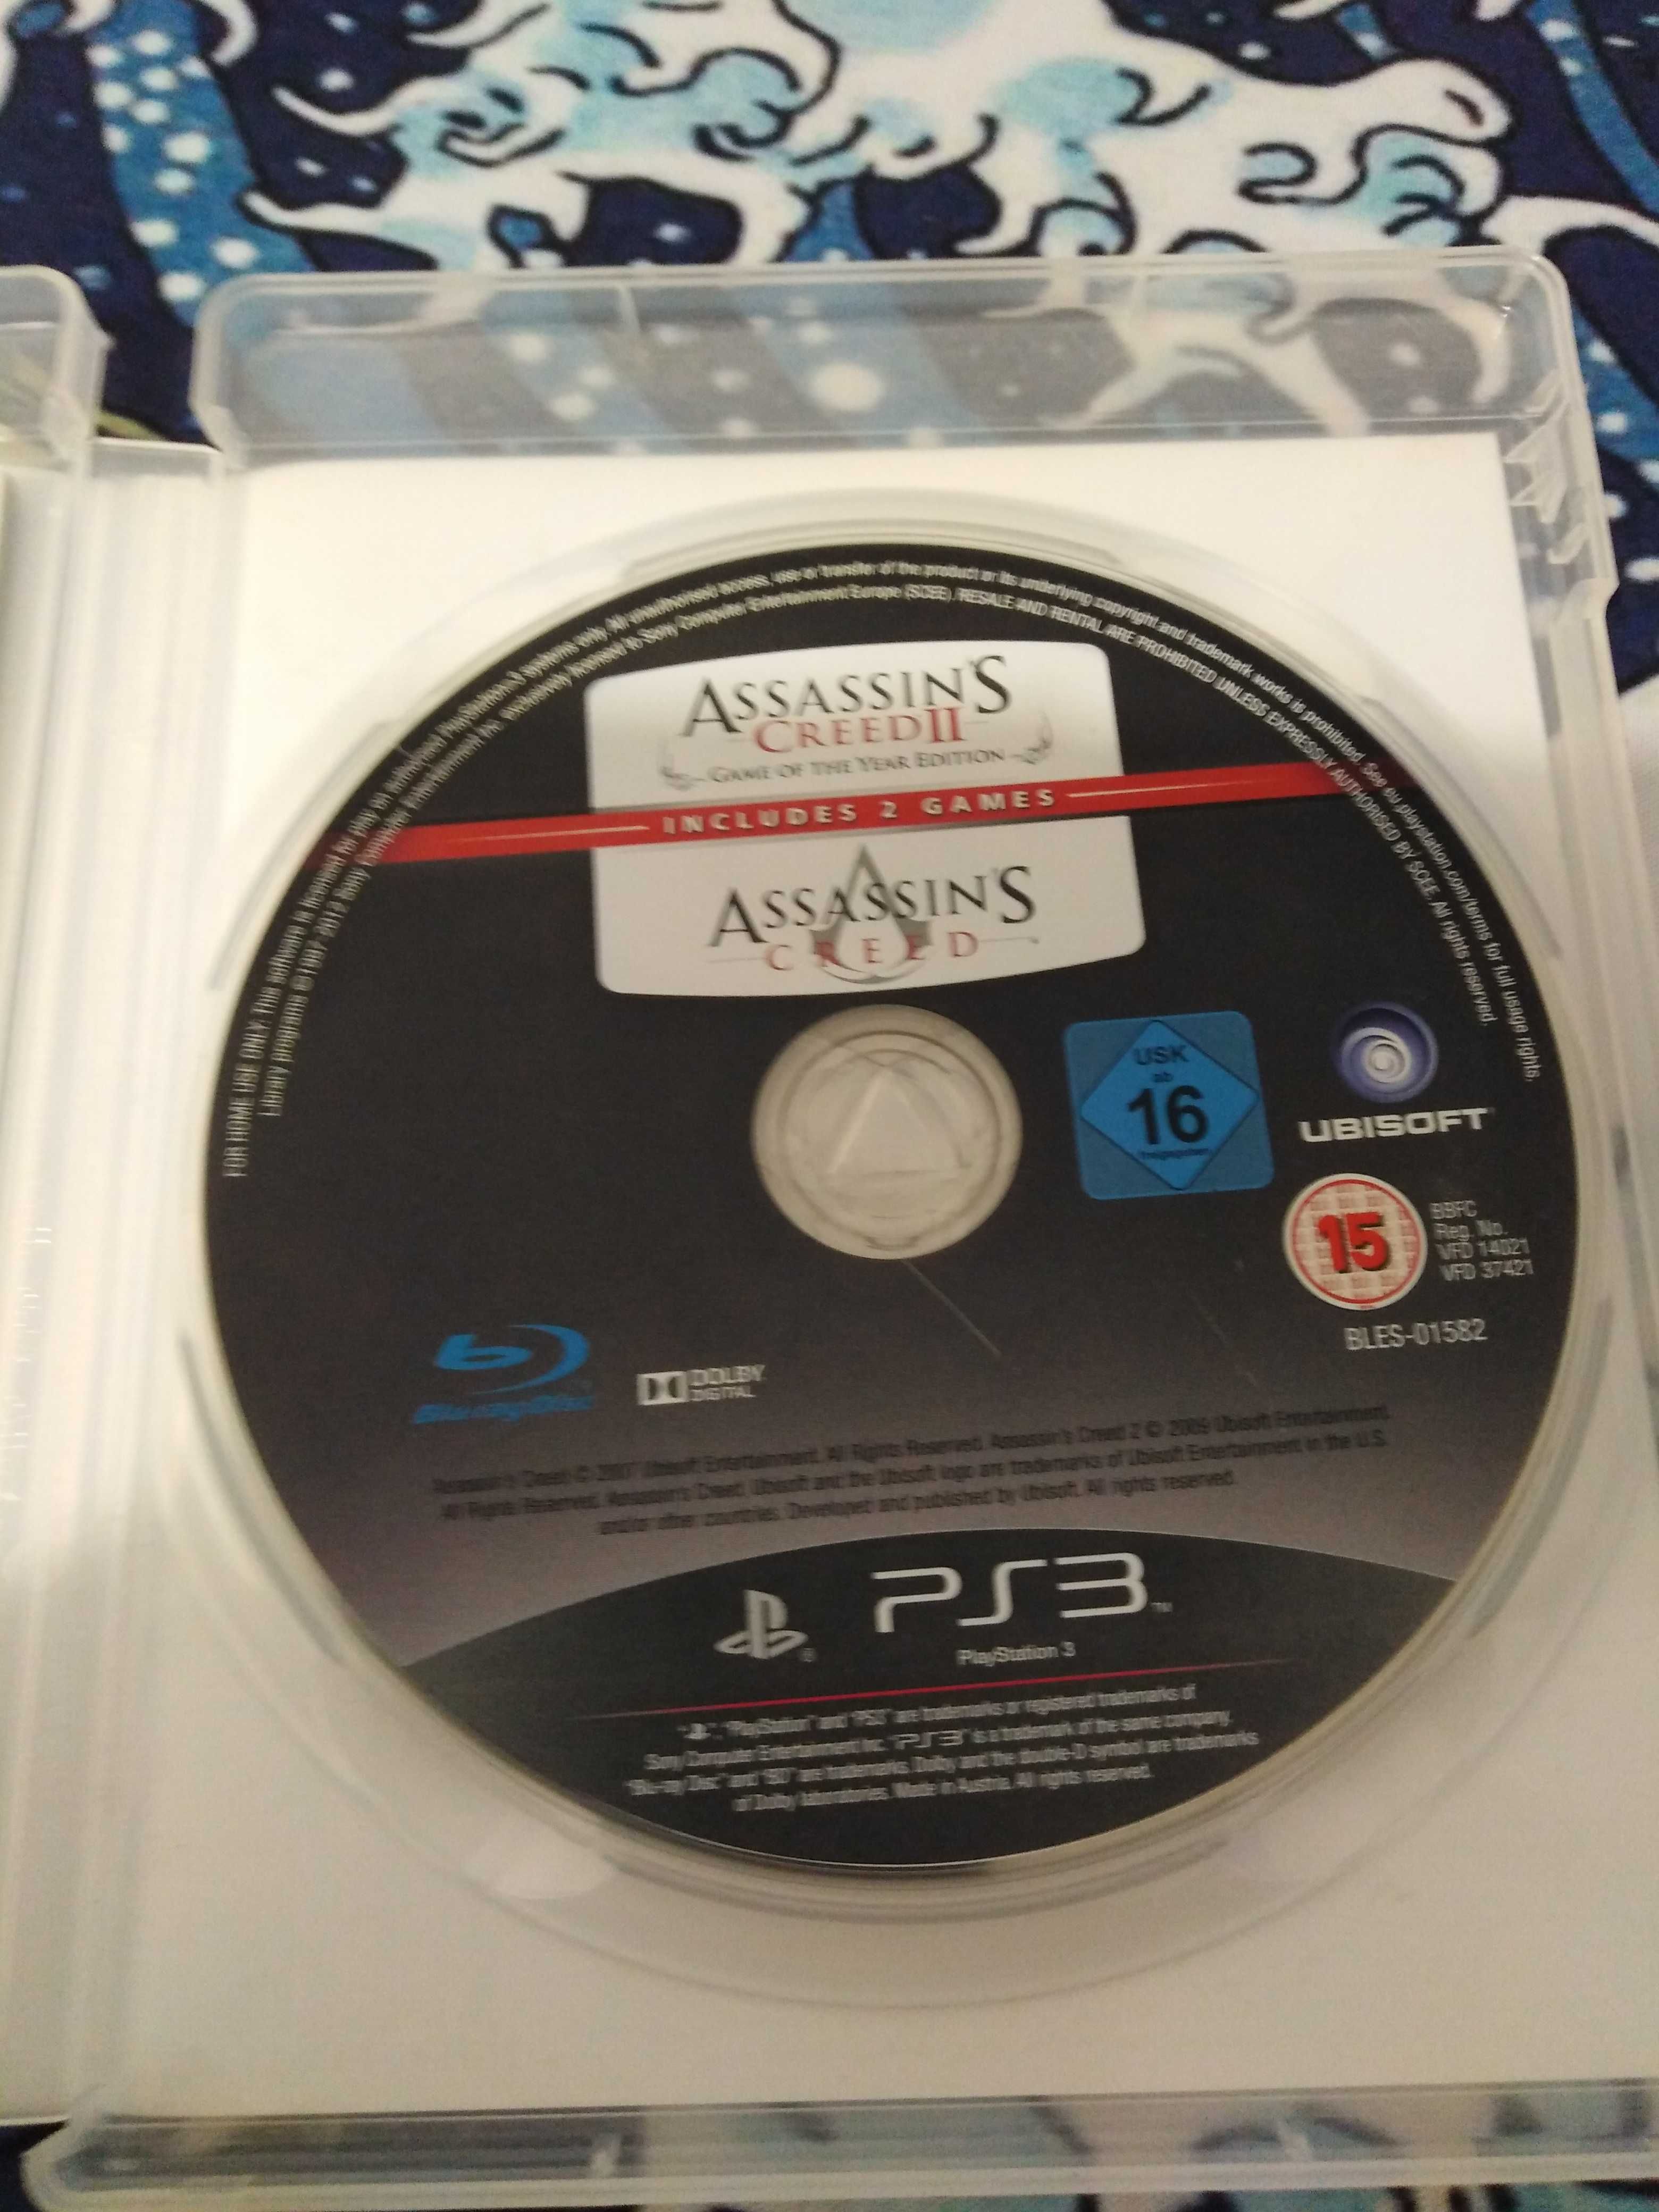 Sprzedam grę Assassin's Creed 2 i Assassin's Creed 1 na konsole ps3